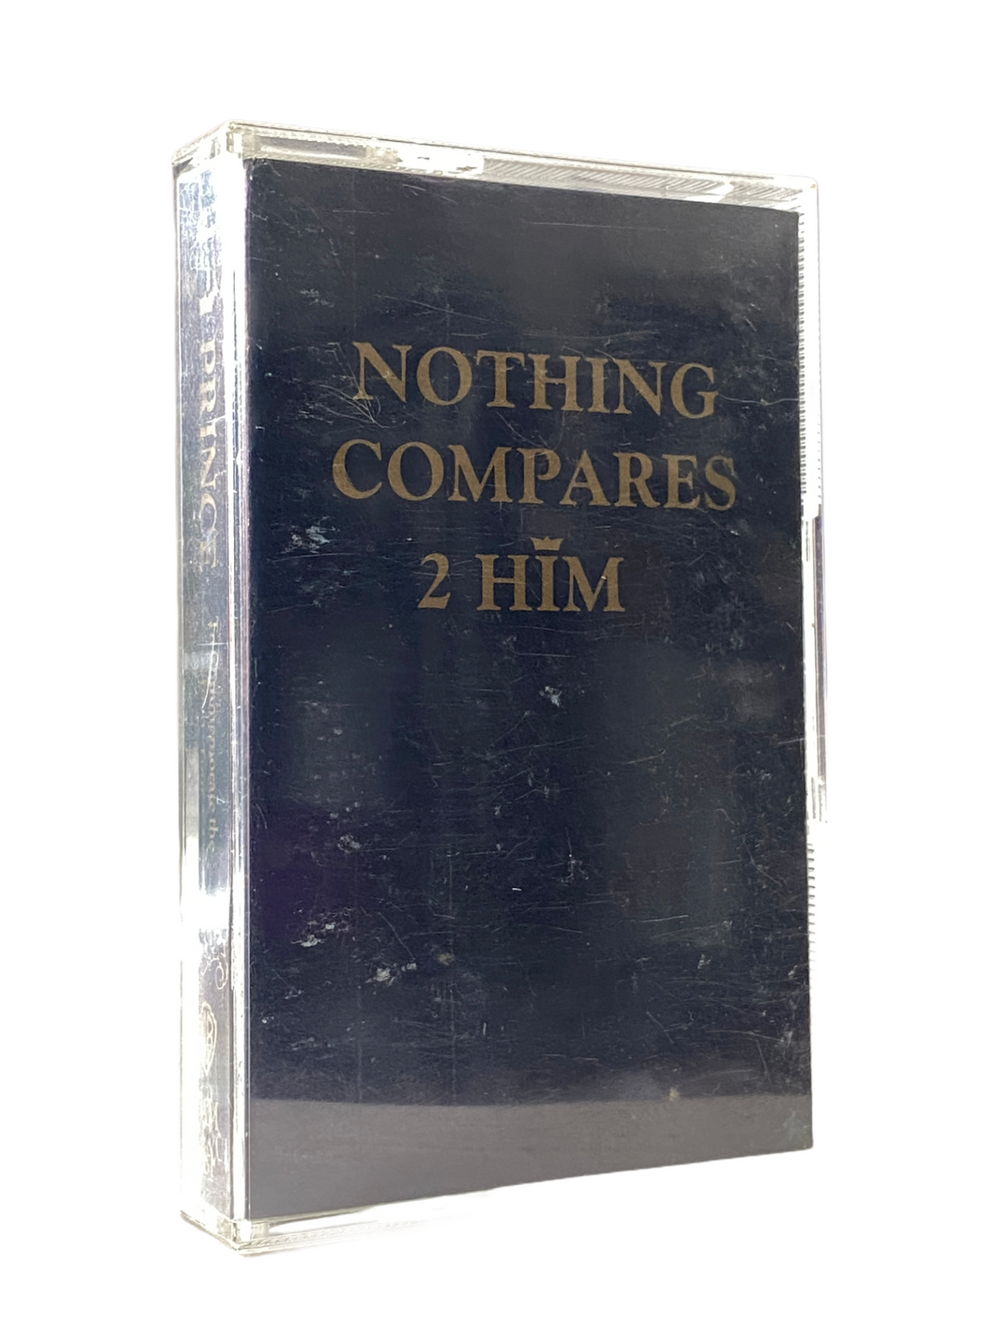 Prince – Nothing Compares 2 Him Cassette Album Promo Compilation UK Preloved: 1990